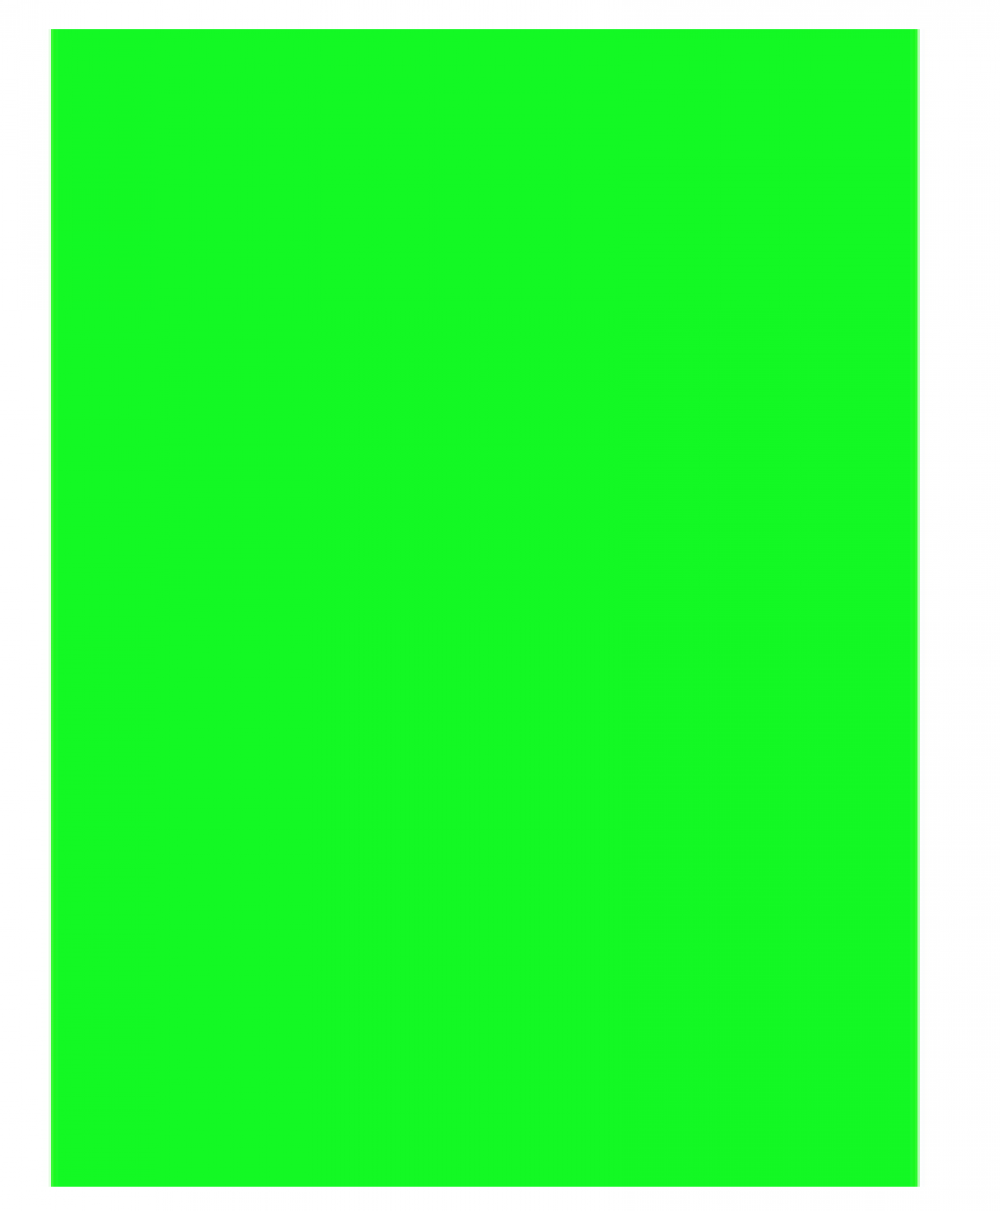 Folie autocolanta asimetrica verde neon, mare